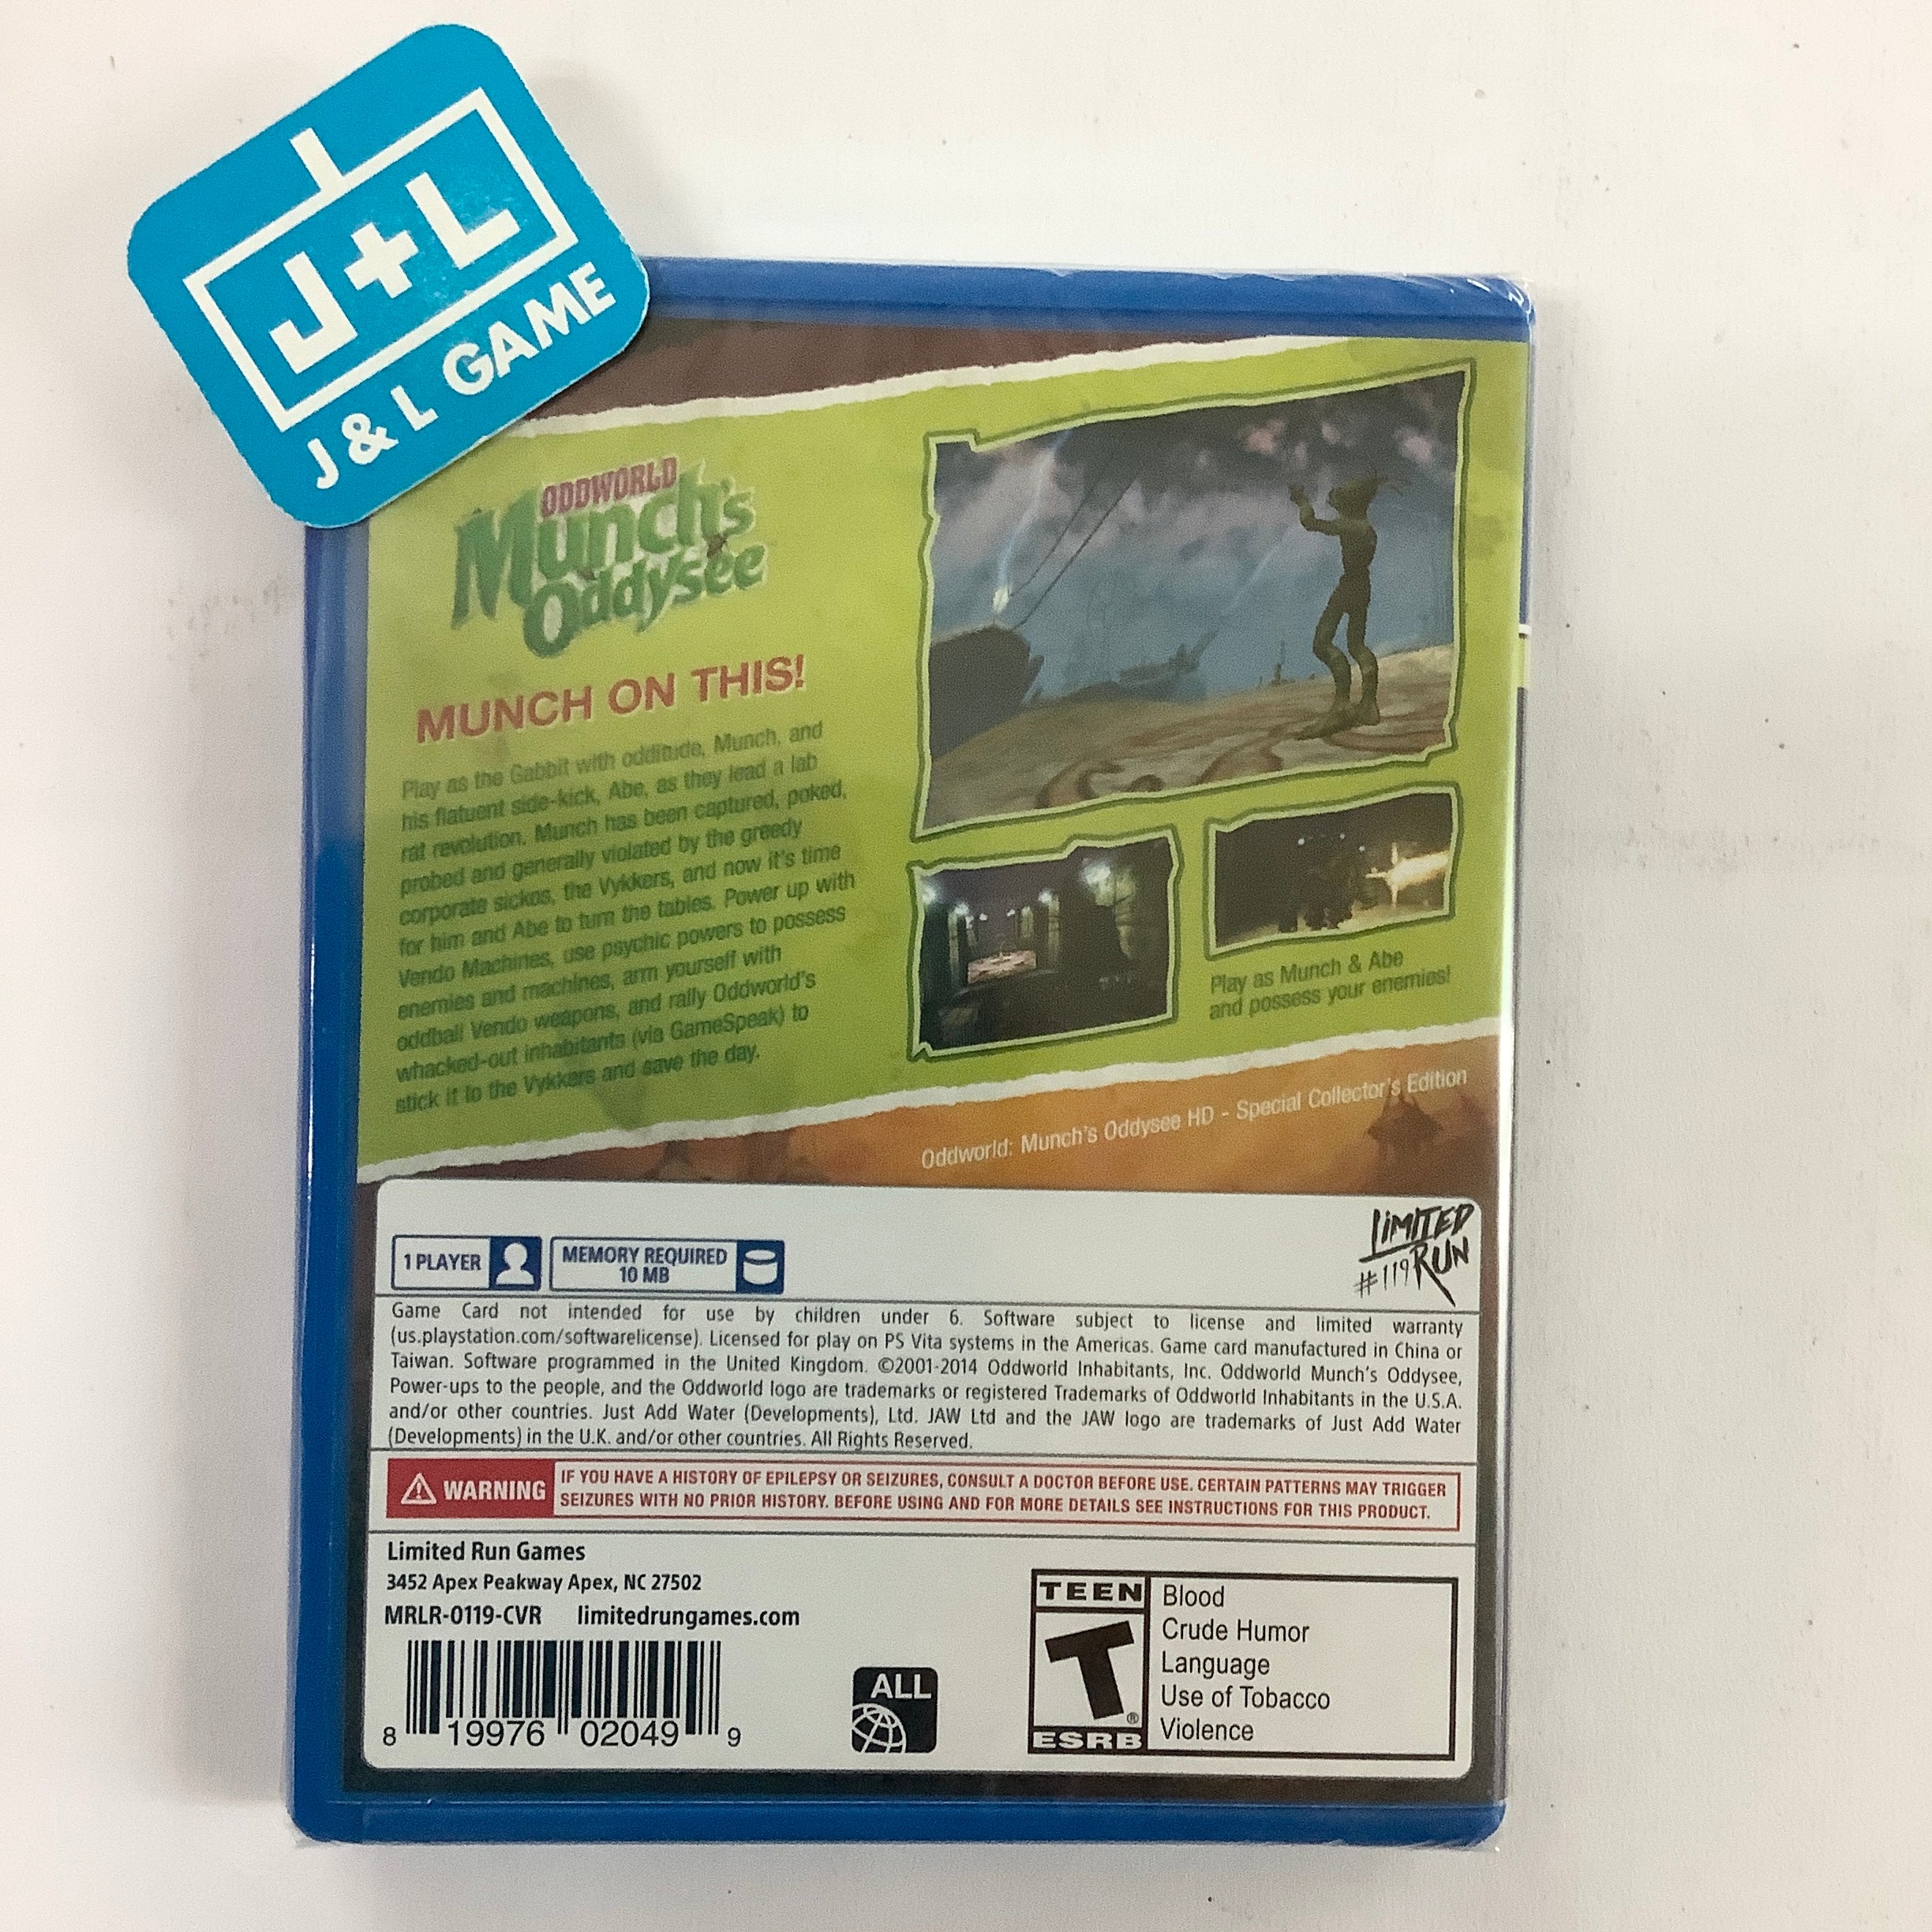 Oddworld: Munch's Oddysee (Limited Run #119) - (PSV) PlayStation Vita Video Games Limited Run Games   